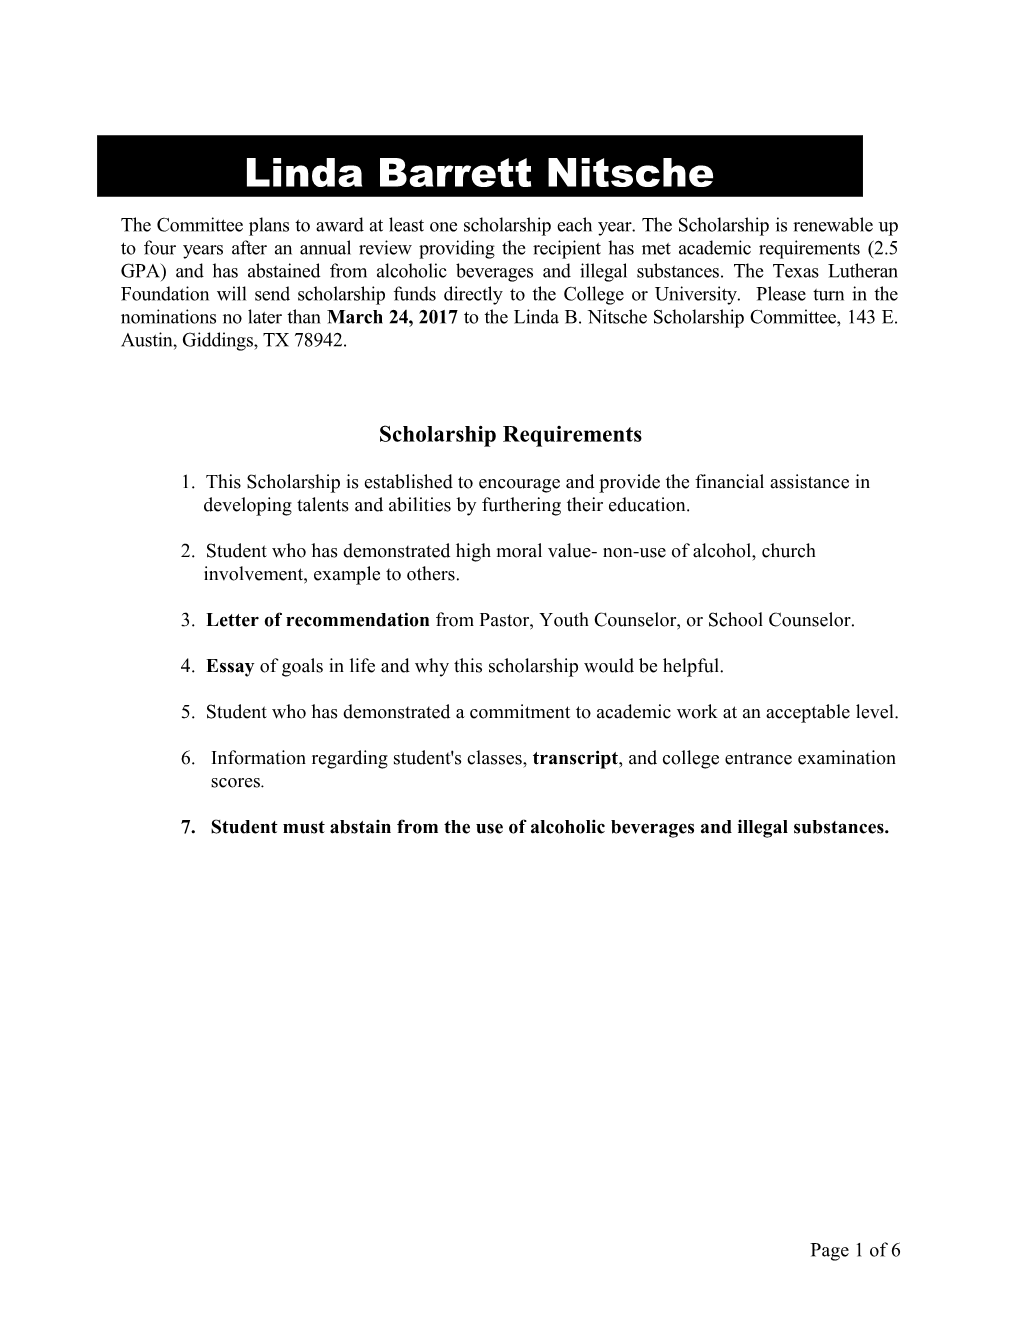 Linda Barrett Nitsche Scholarship